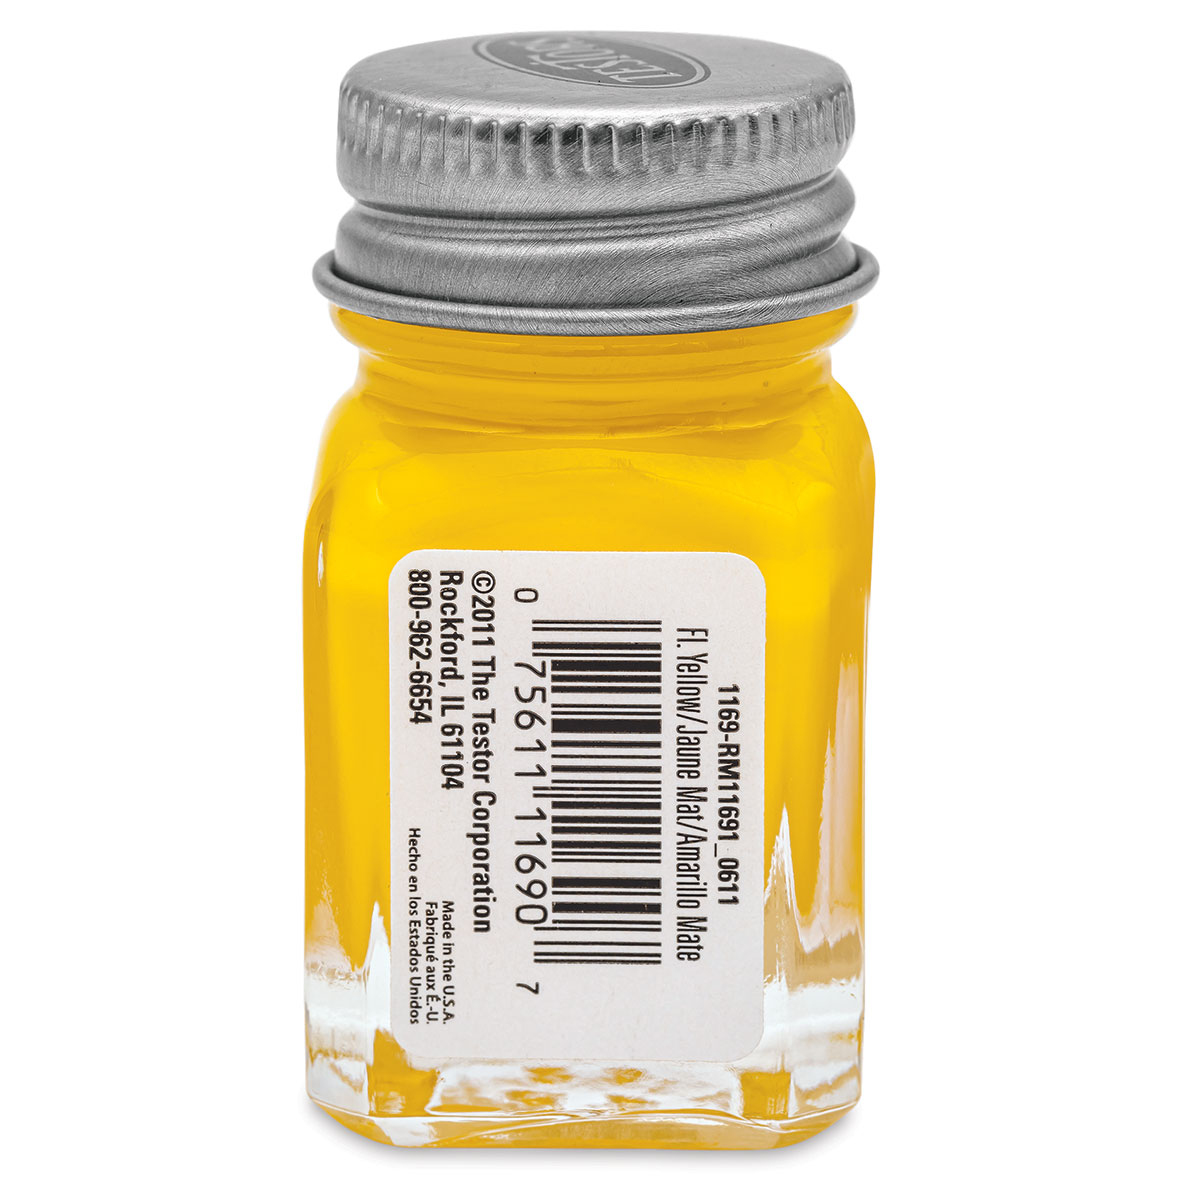 Testors Enamel Paint - Gold, 1/4 oz bottle